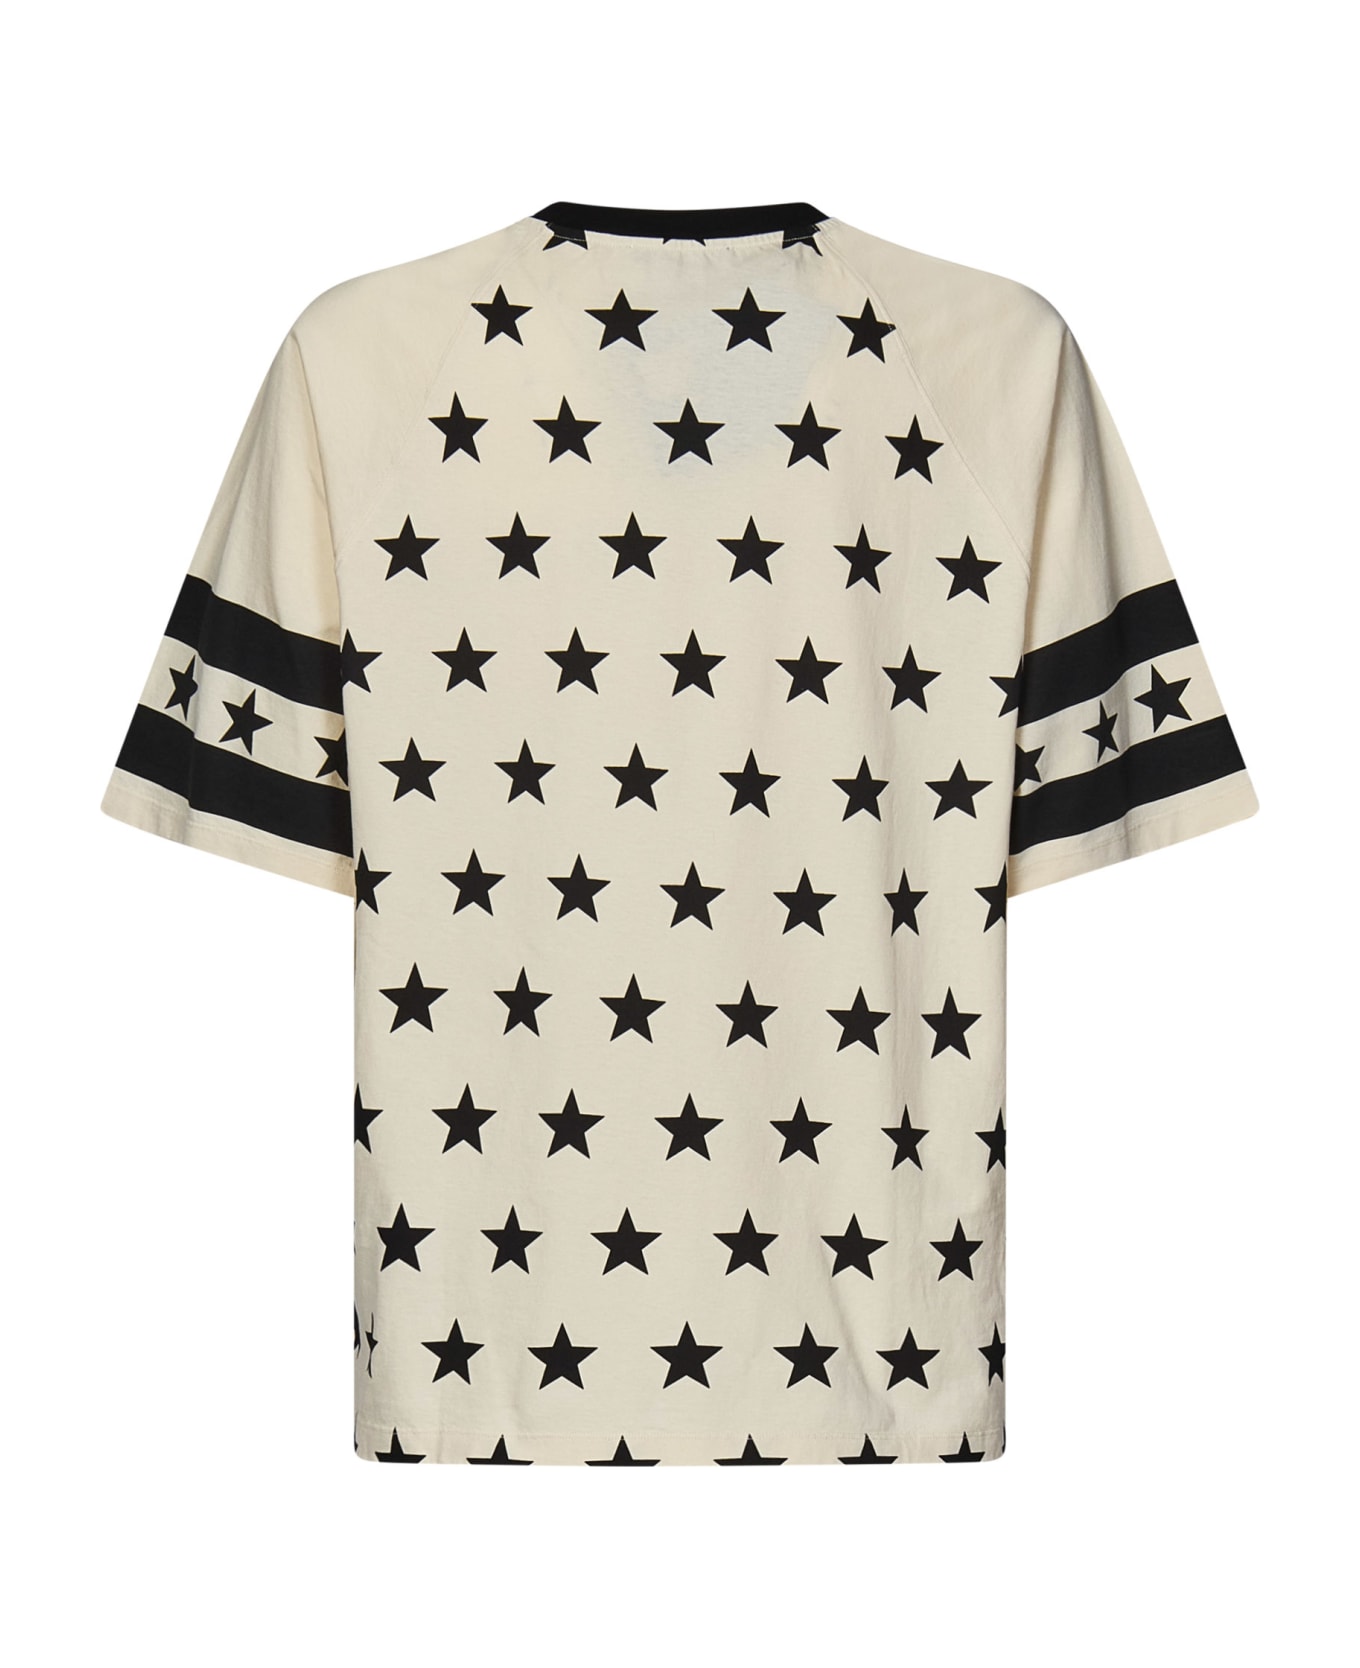 Balmain Paris Signature Star T-shirt - Beige